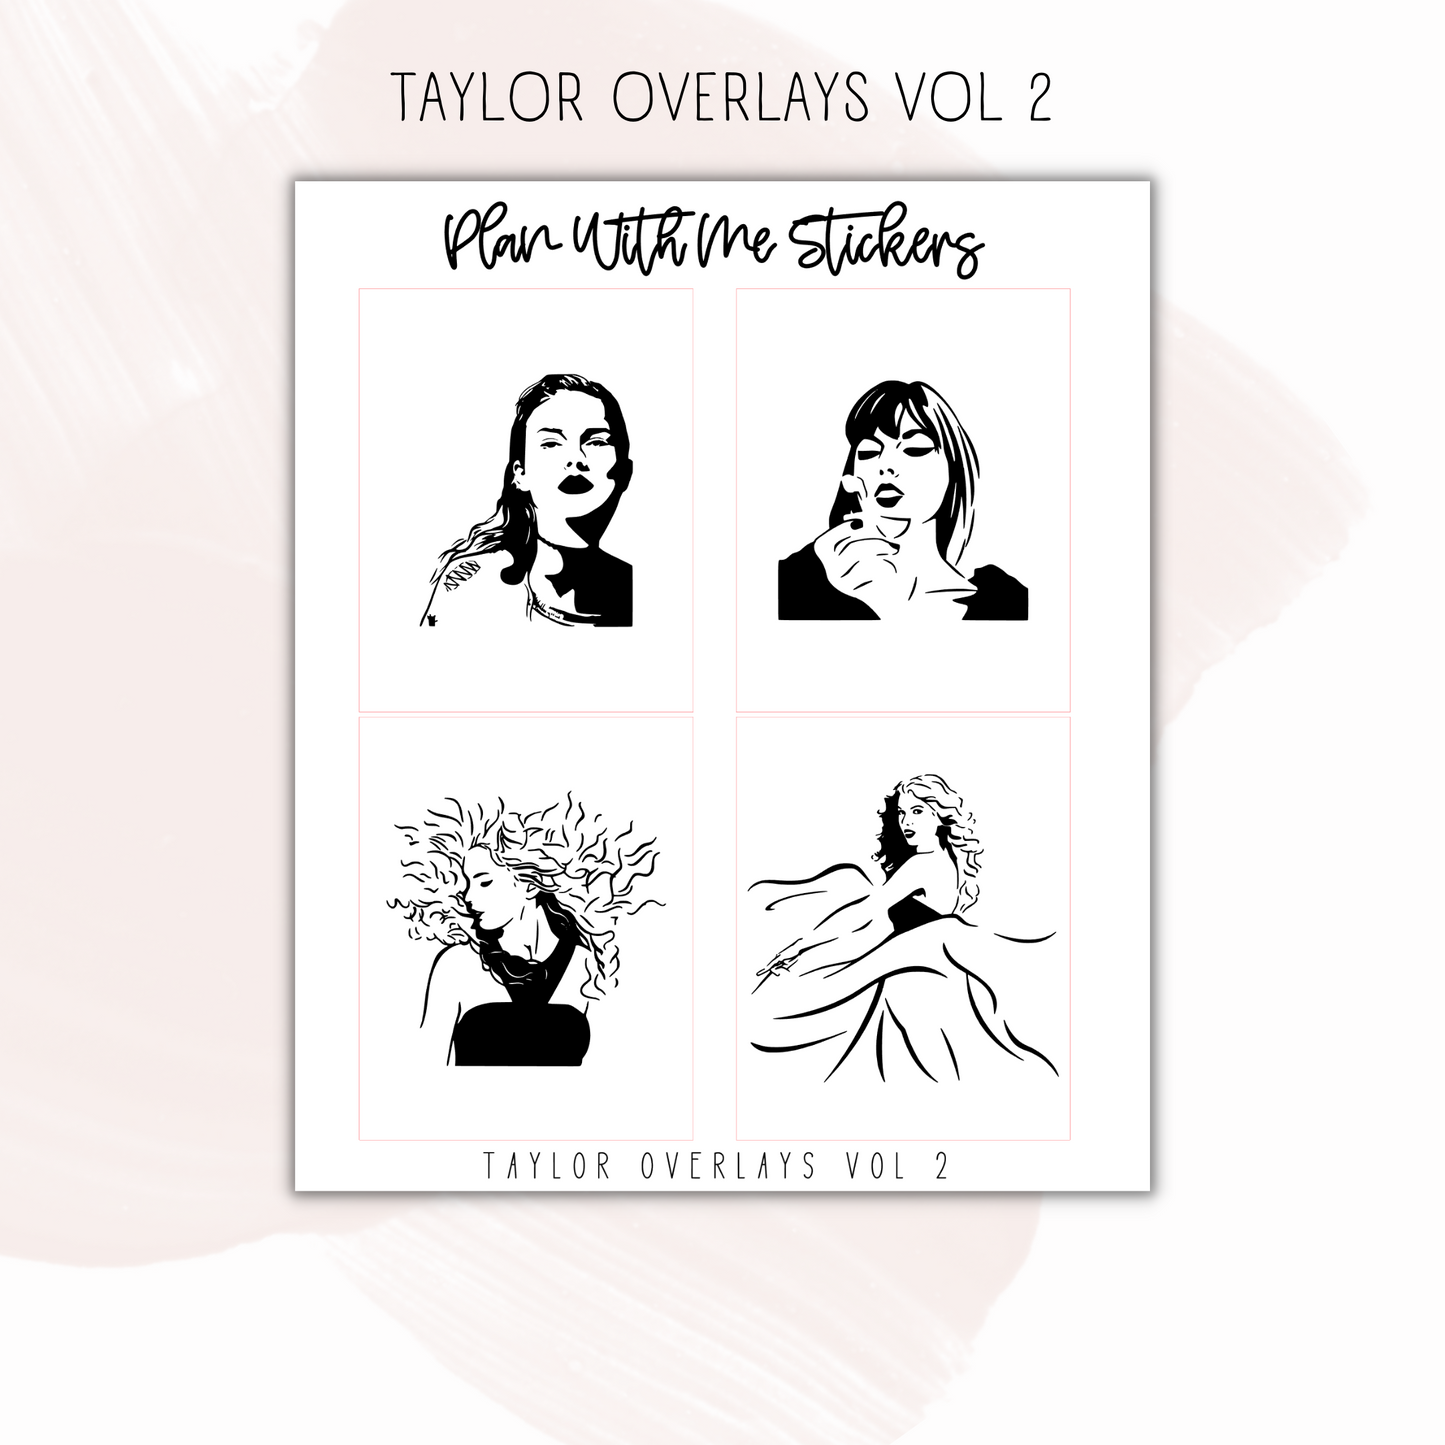 Taylor Overlays Vol 2